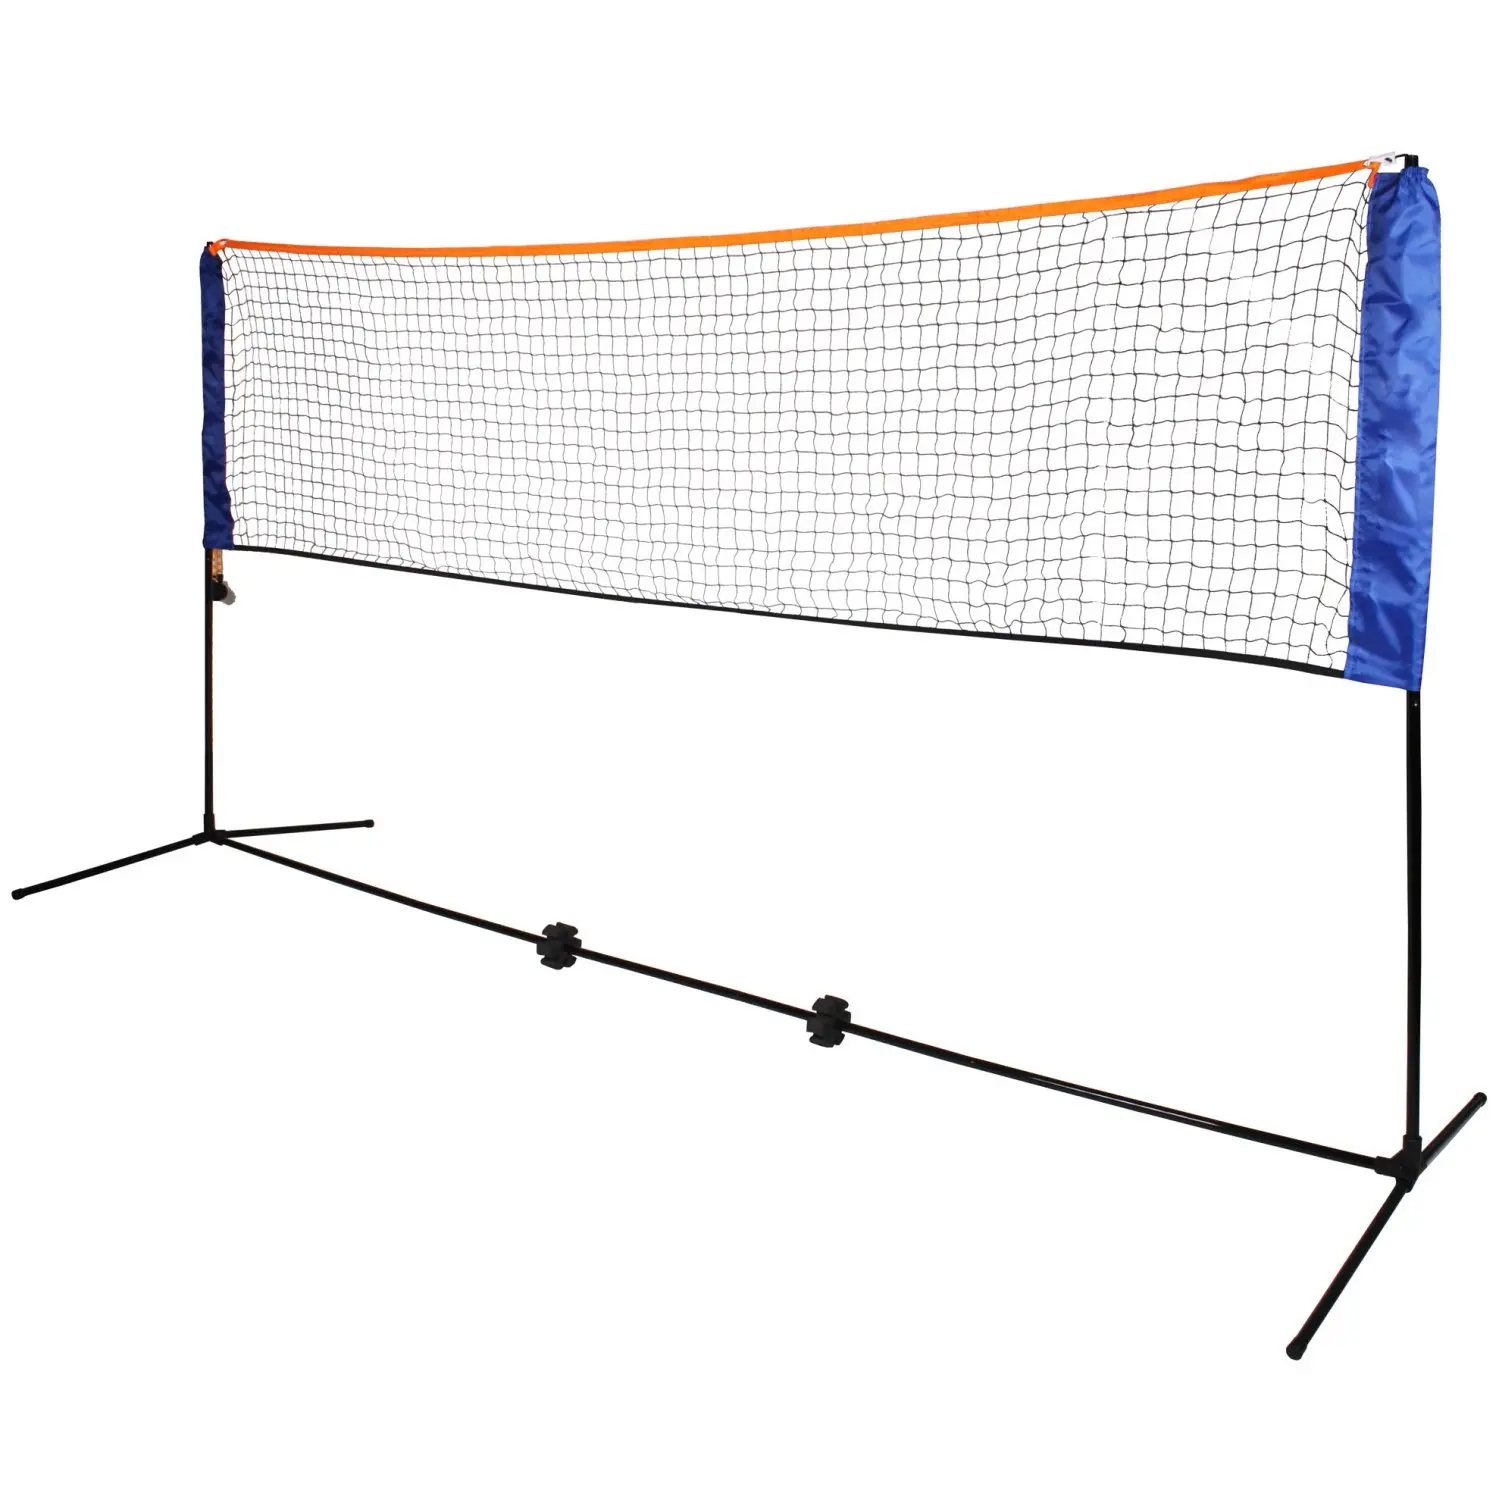 5m Adjustable Foldable Badminton Tennis Volleyball Net Garden Sports Training 